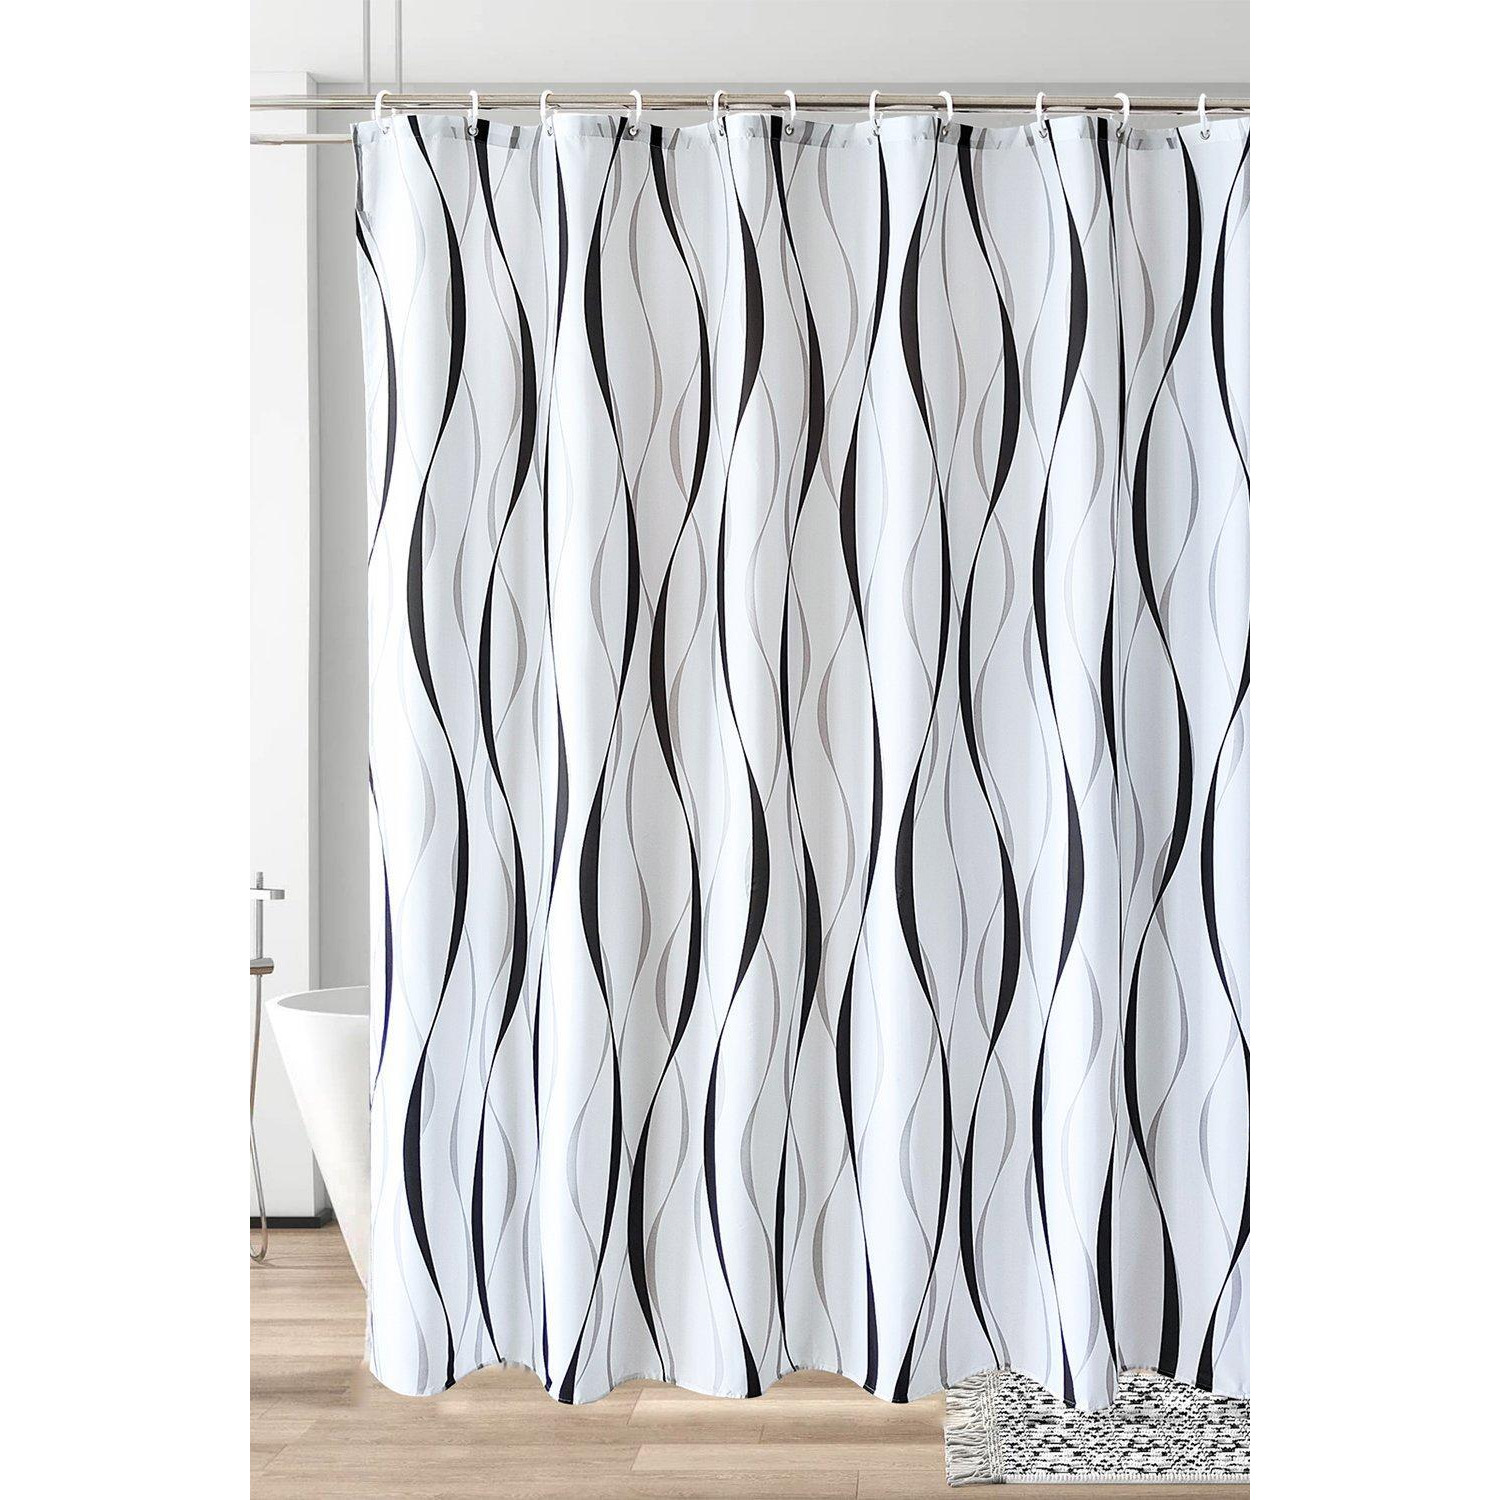 Curved Design, 3D Effect Shower Curtain, Black, Grey & White - 180cm x 180cm - image 1